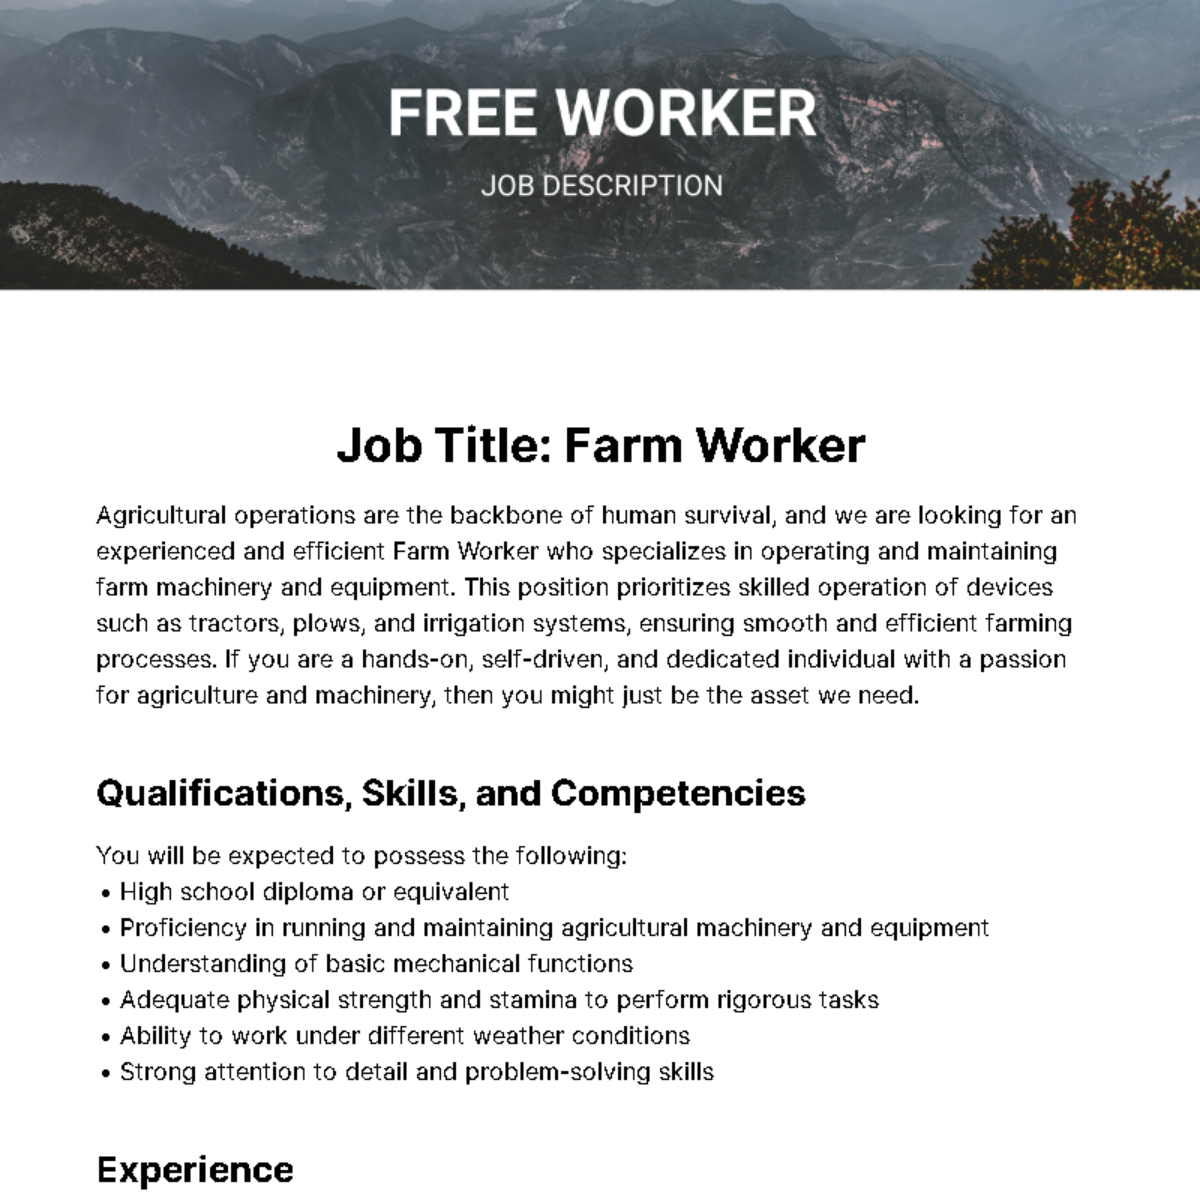 Free Worker Job Description Template